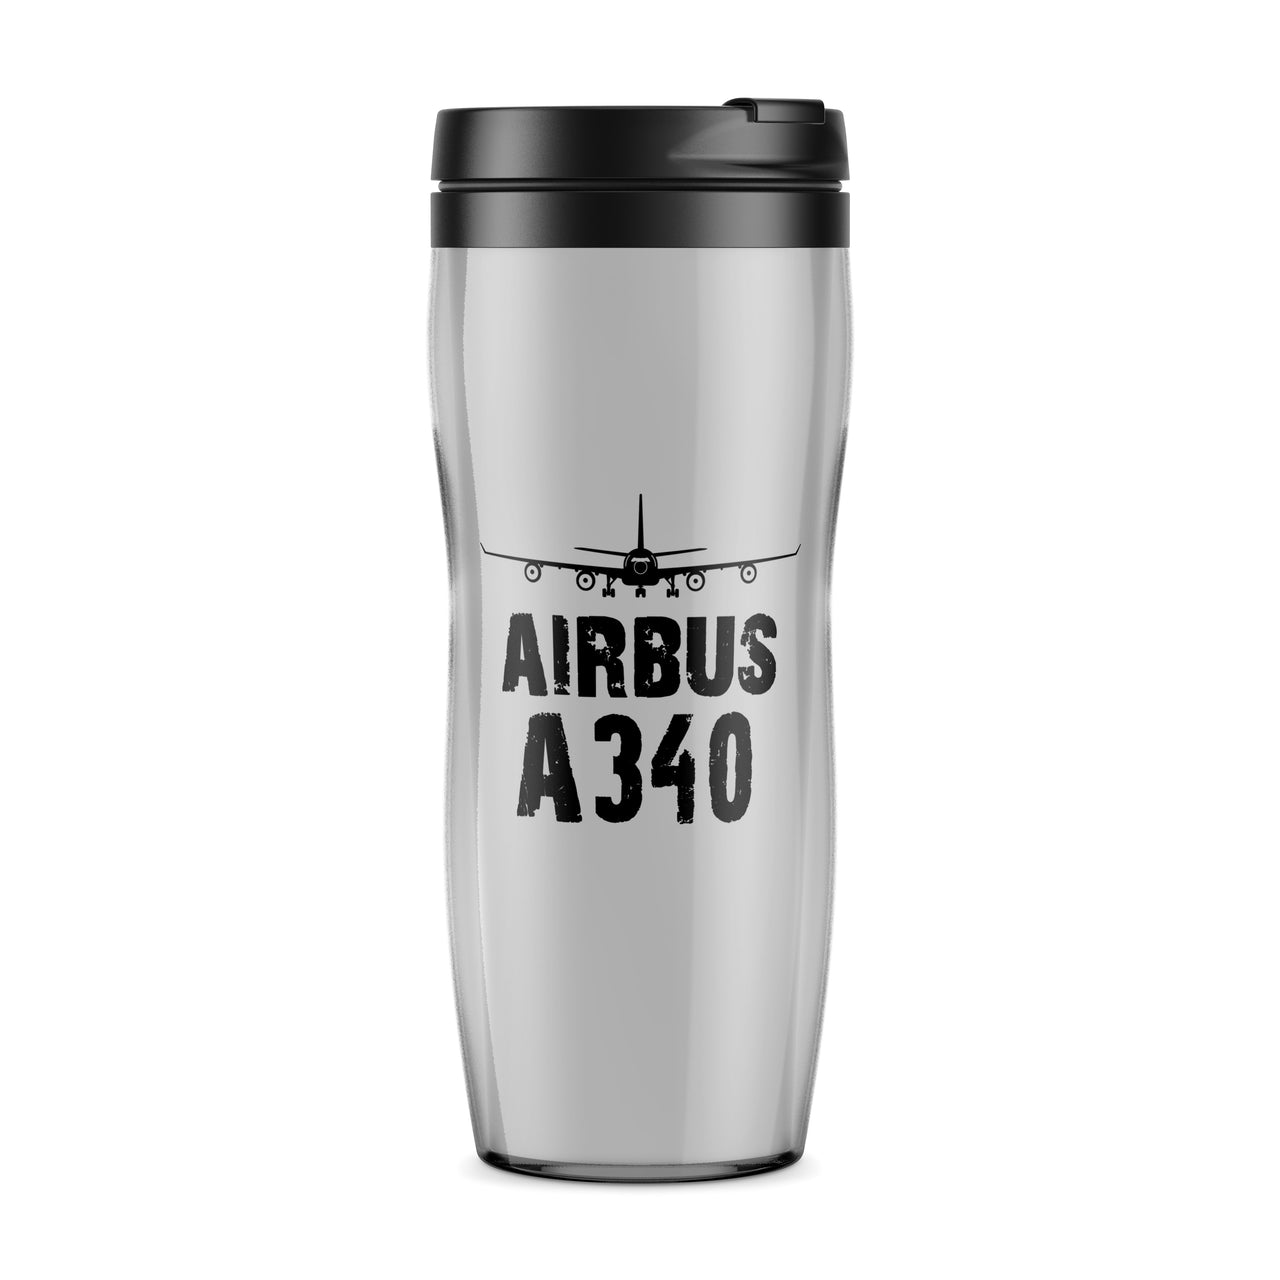 Airbus A340 & Plane Designed Travel Mugs